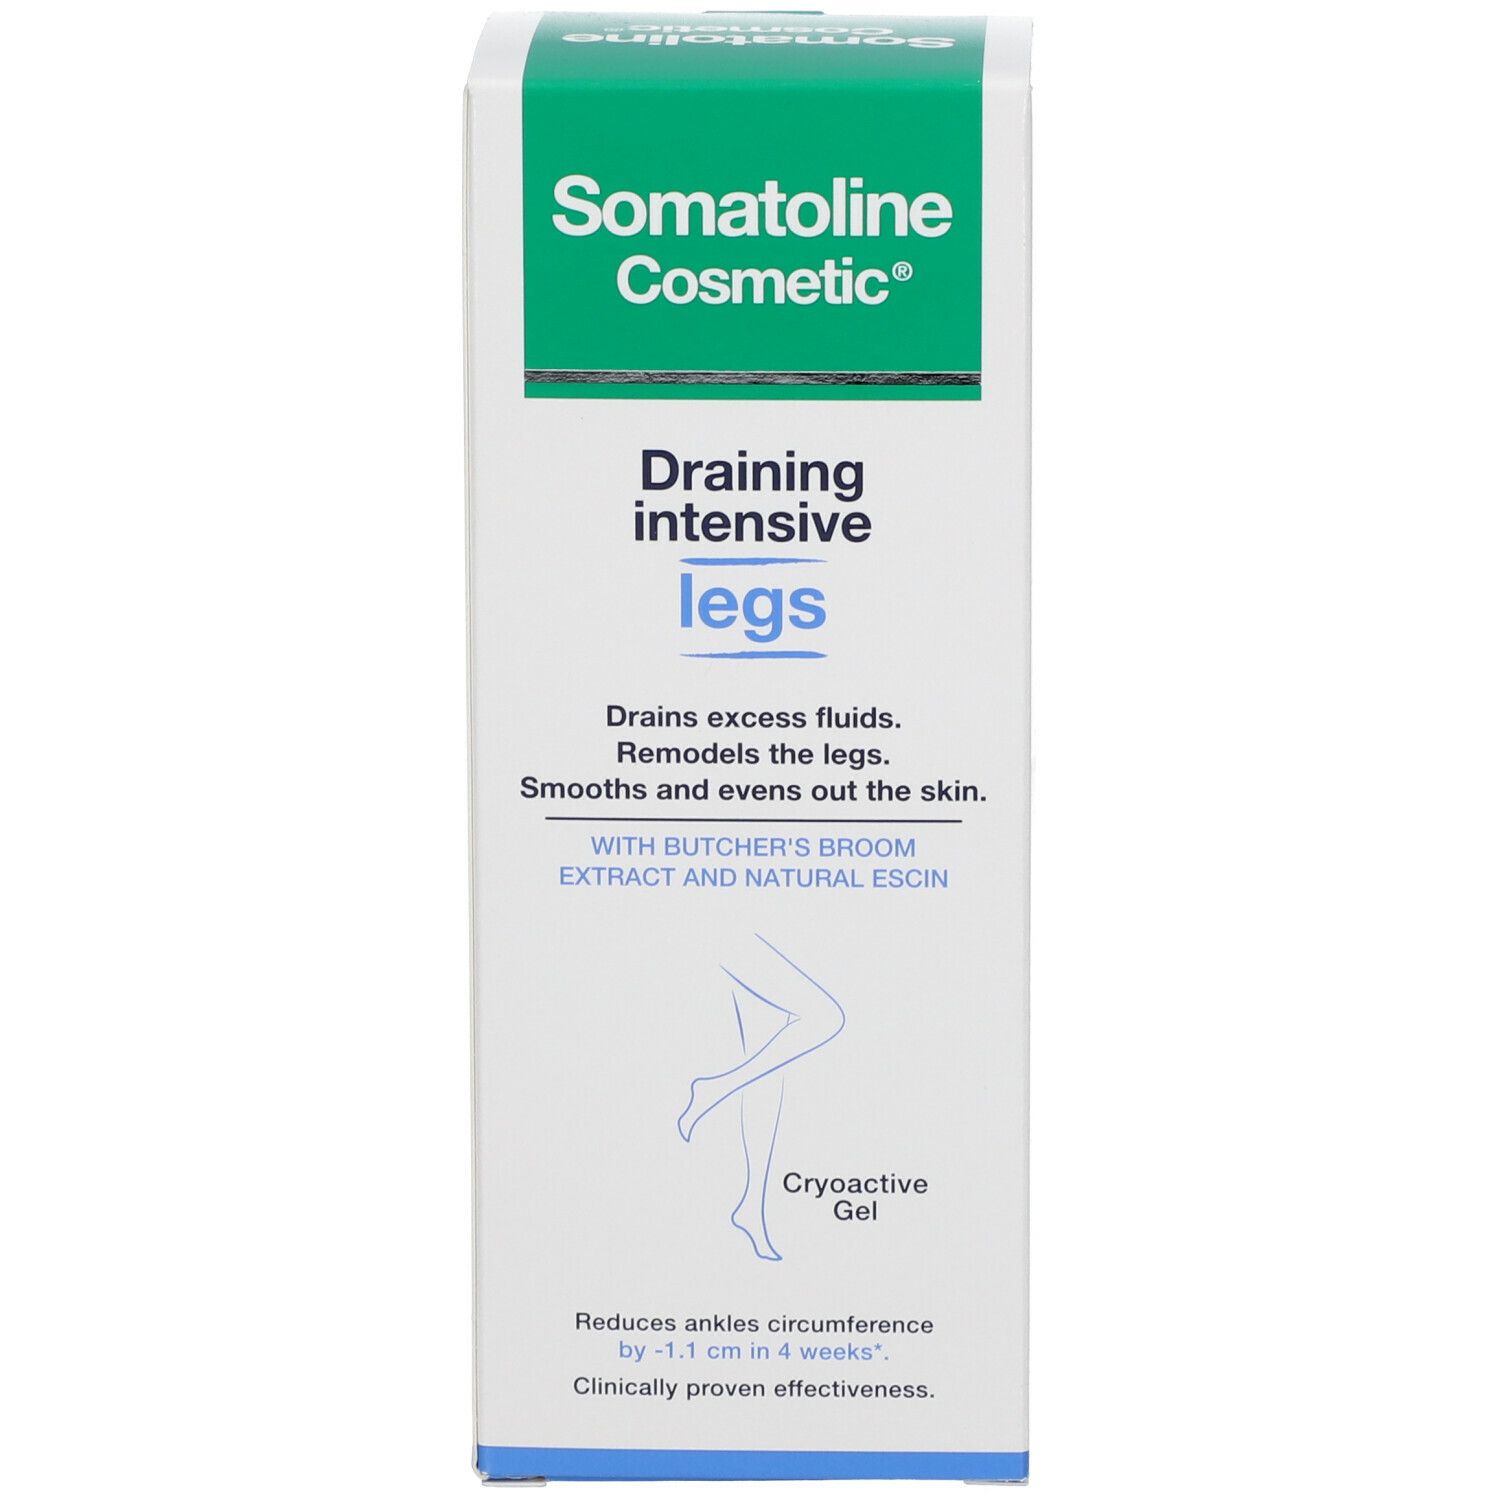 Somatoline Cosmetic® Amincissant Drainant Jambes